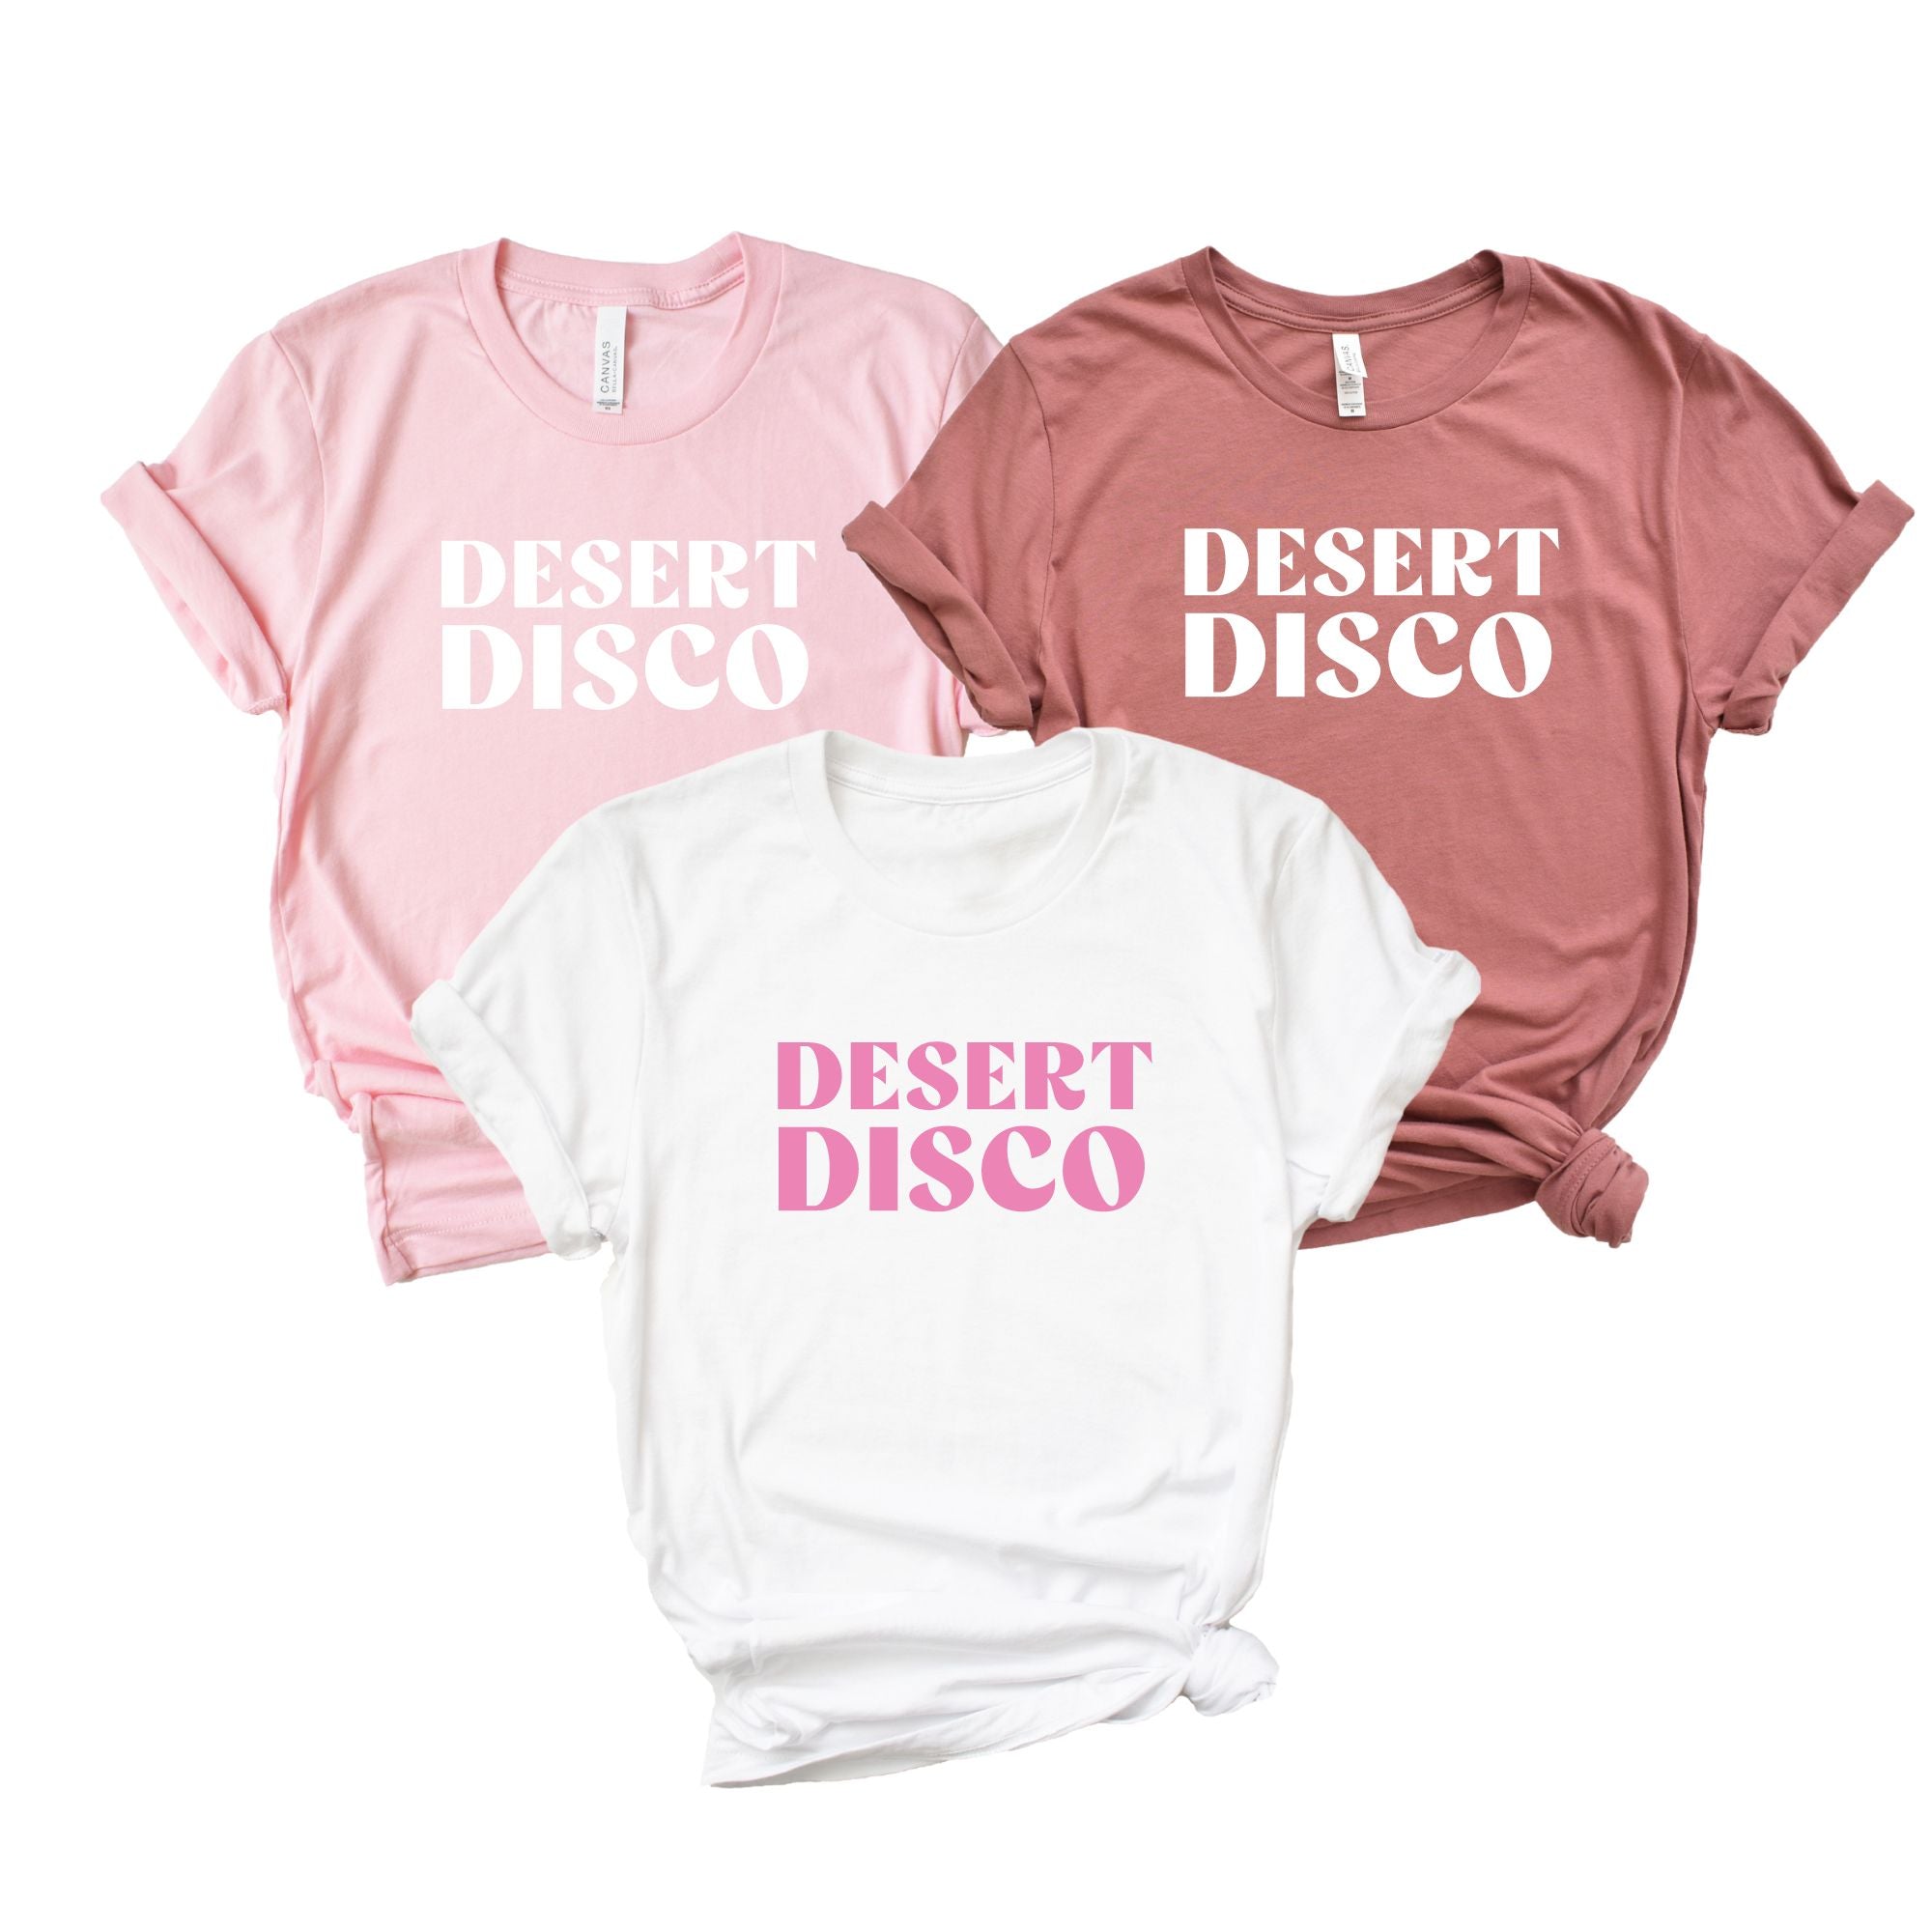 Desert Disco Shirt - Sprinkled With Pink #bachelorette #custom #gifts